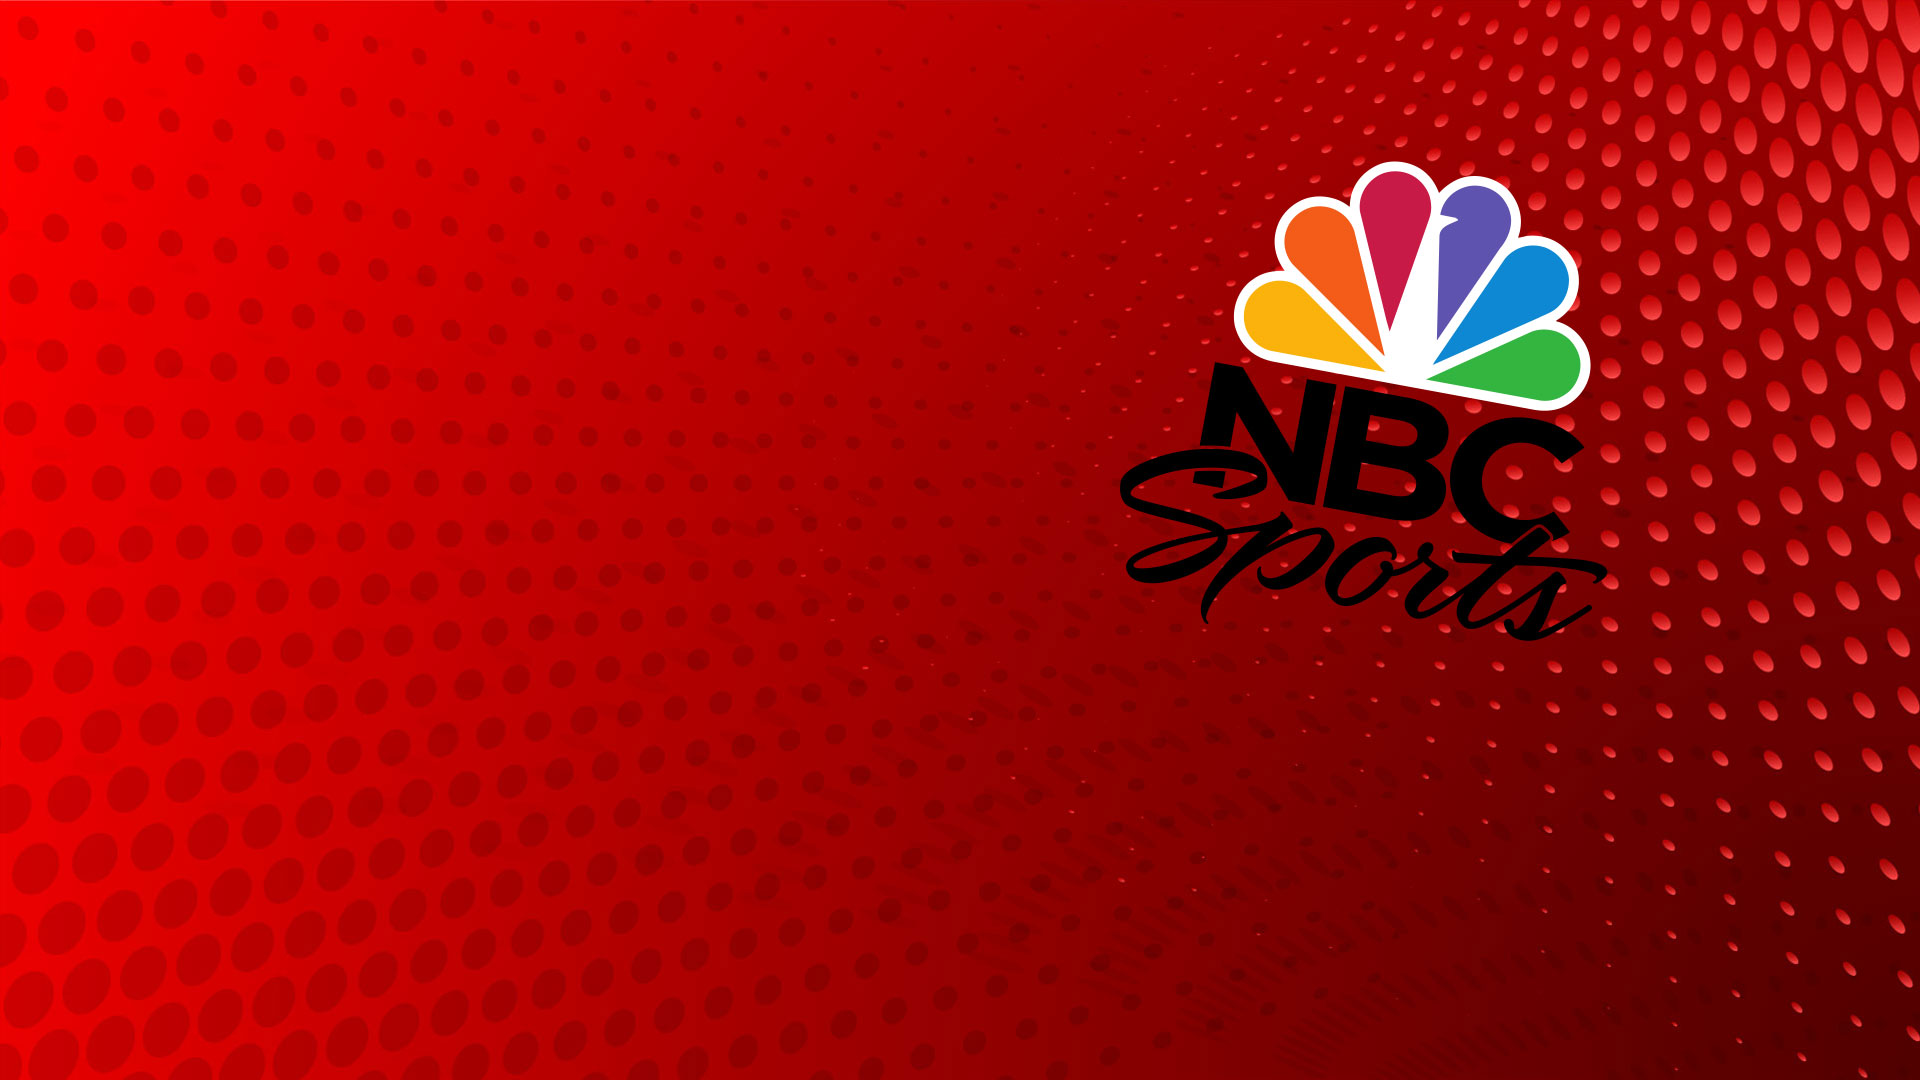 NBC Sports Discontinued